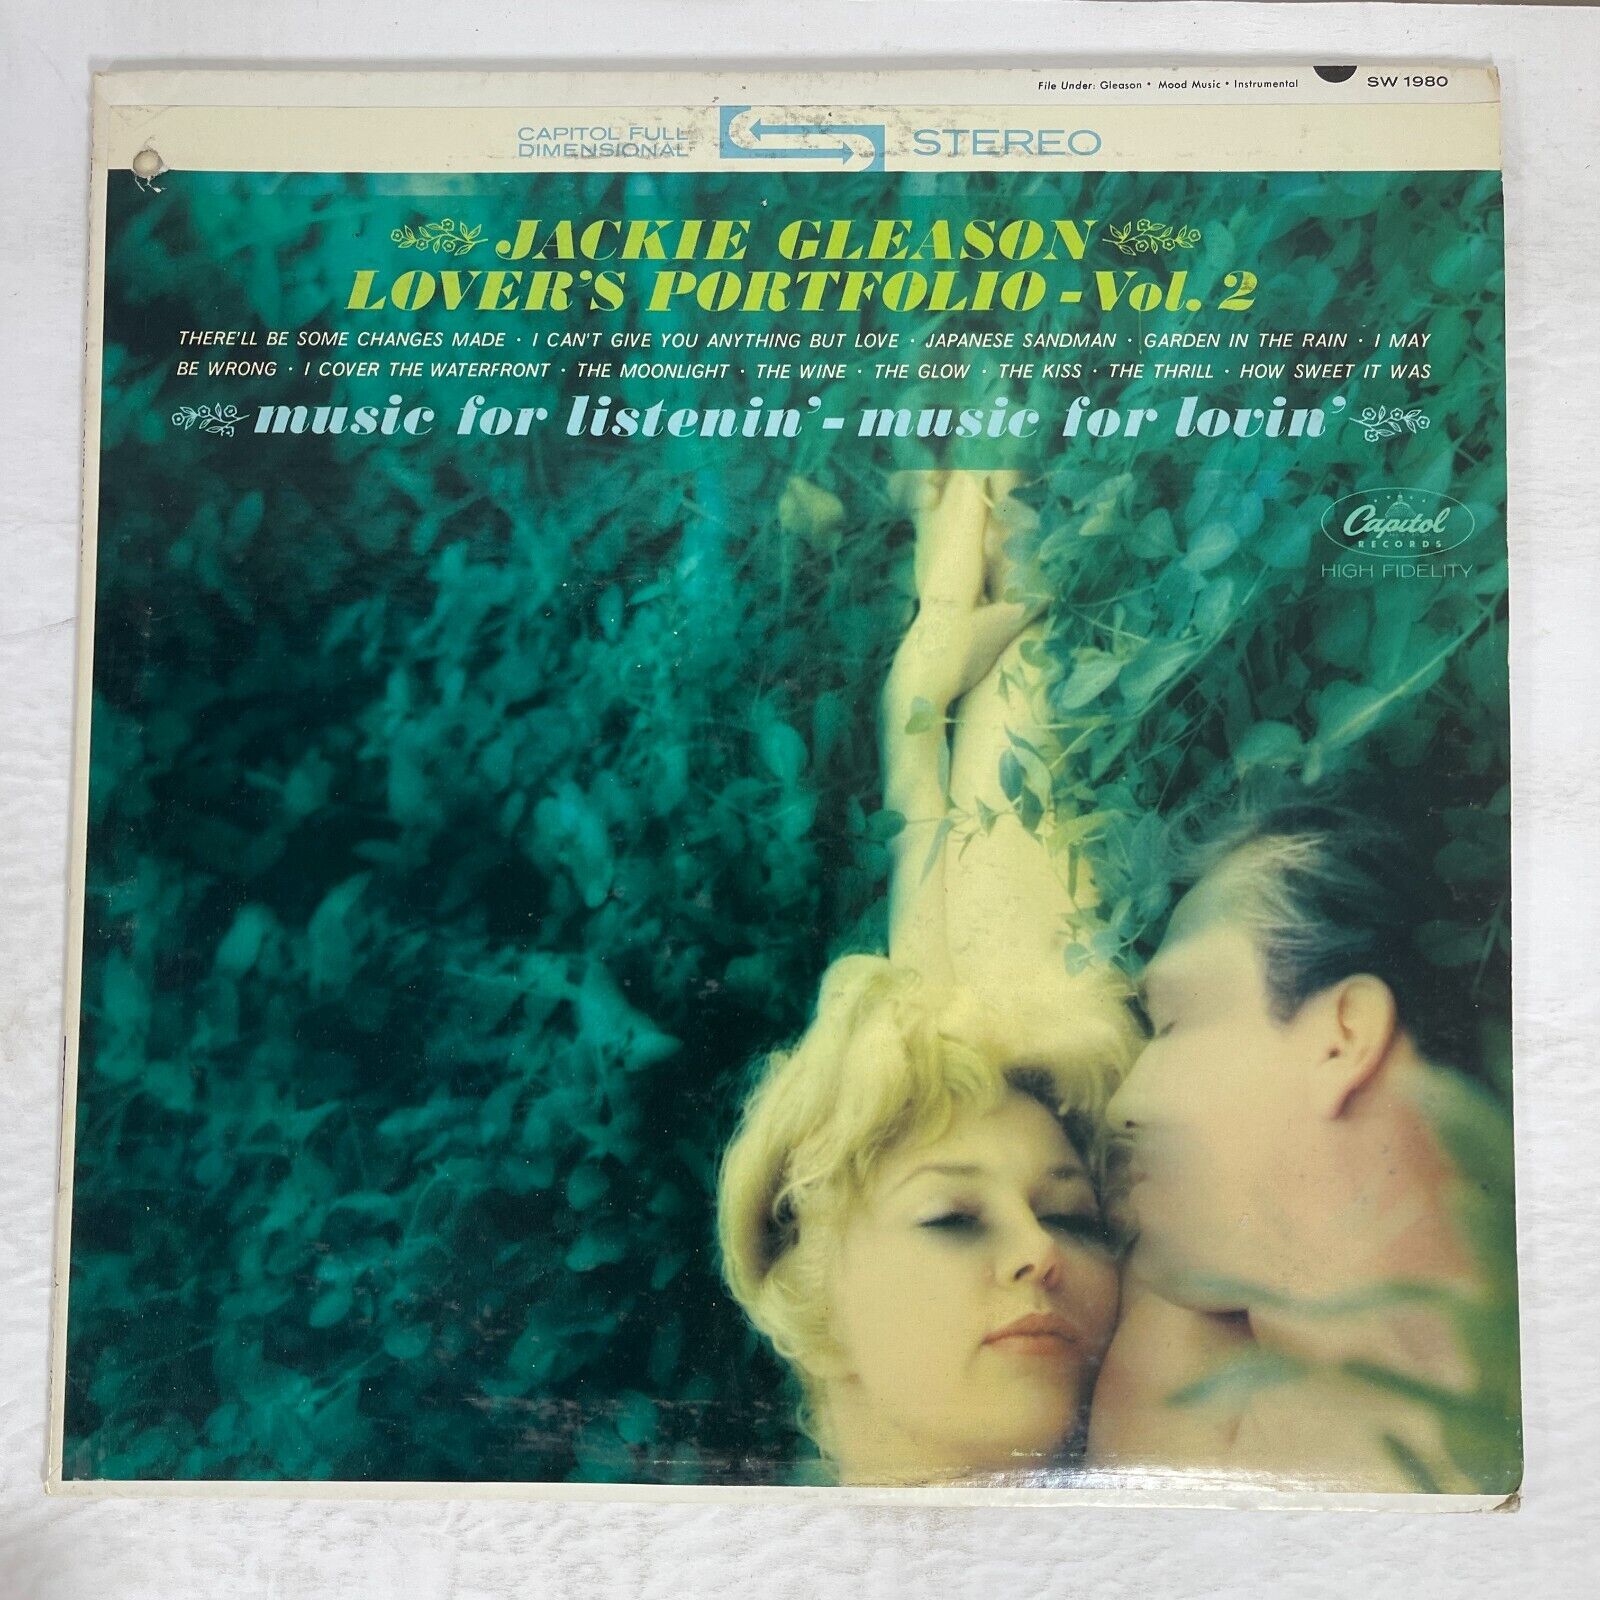 Jackie Gleason – Lover's Portfolio - Vol. 2 Vinyl, LP 1964 Capitol Records